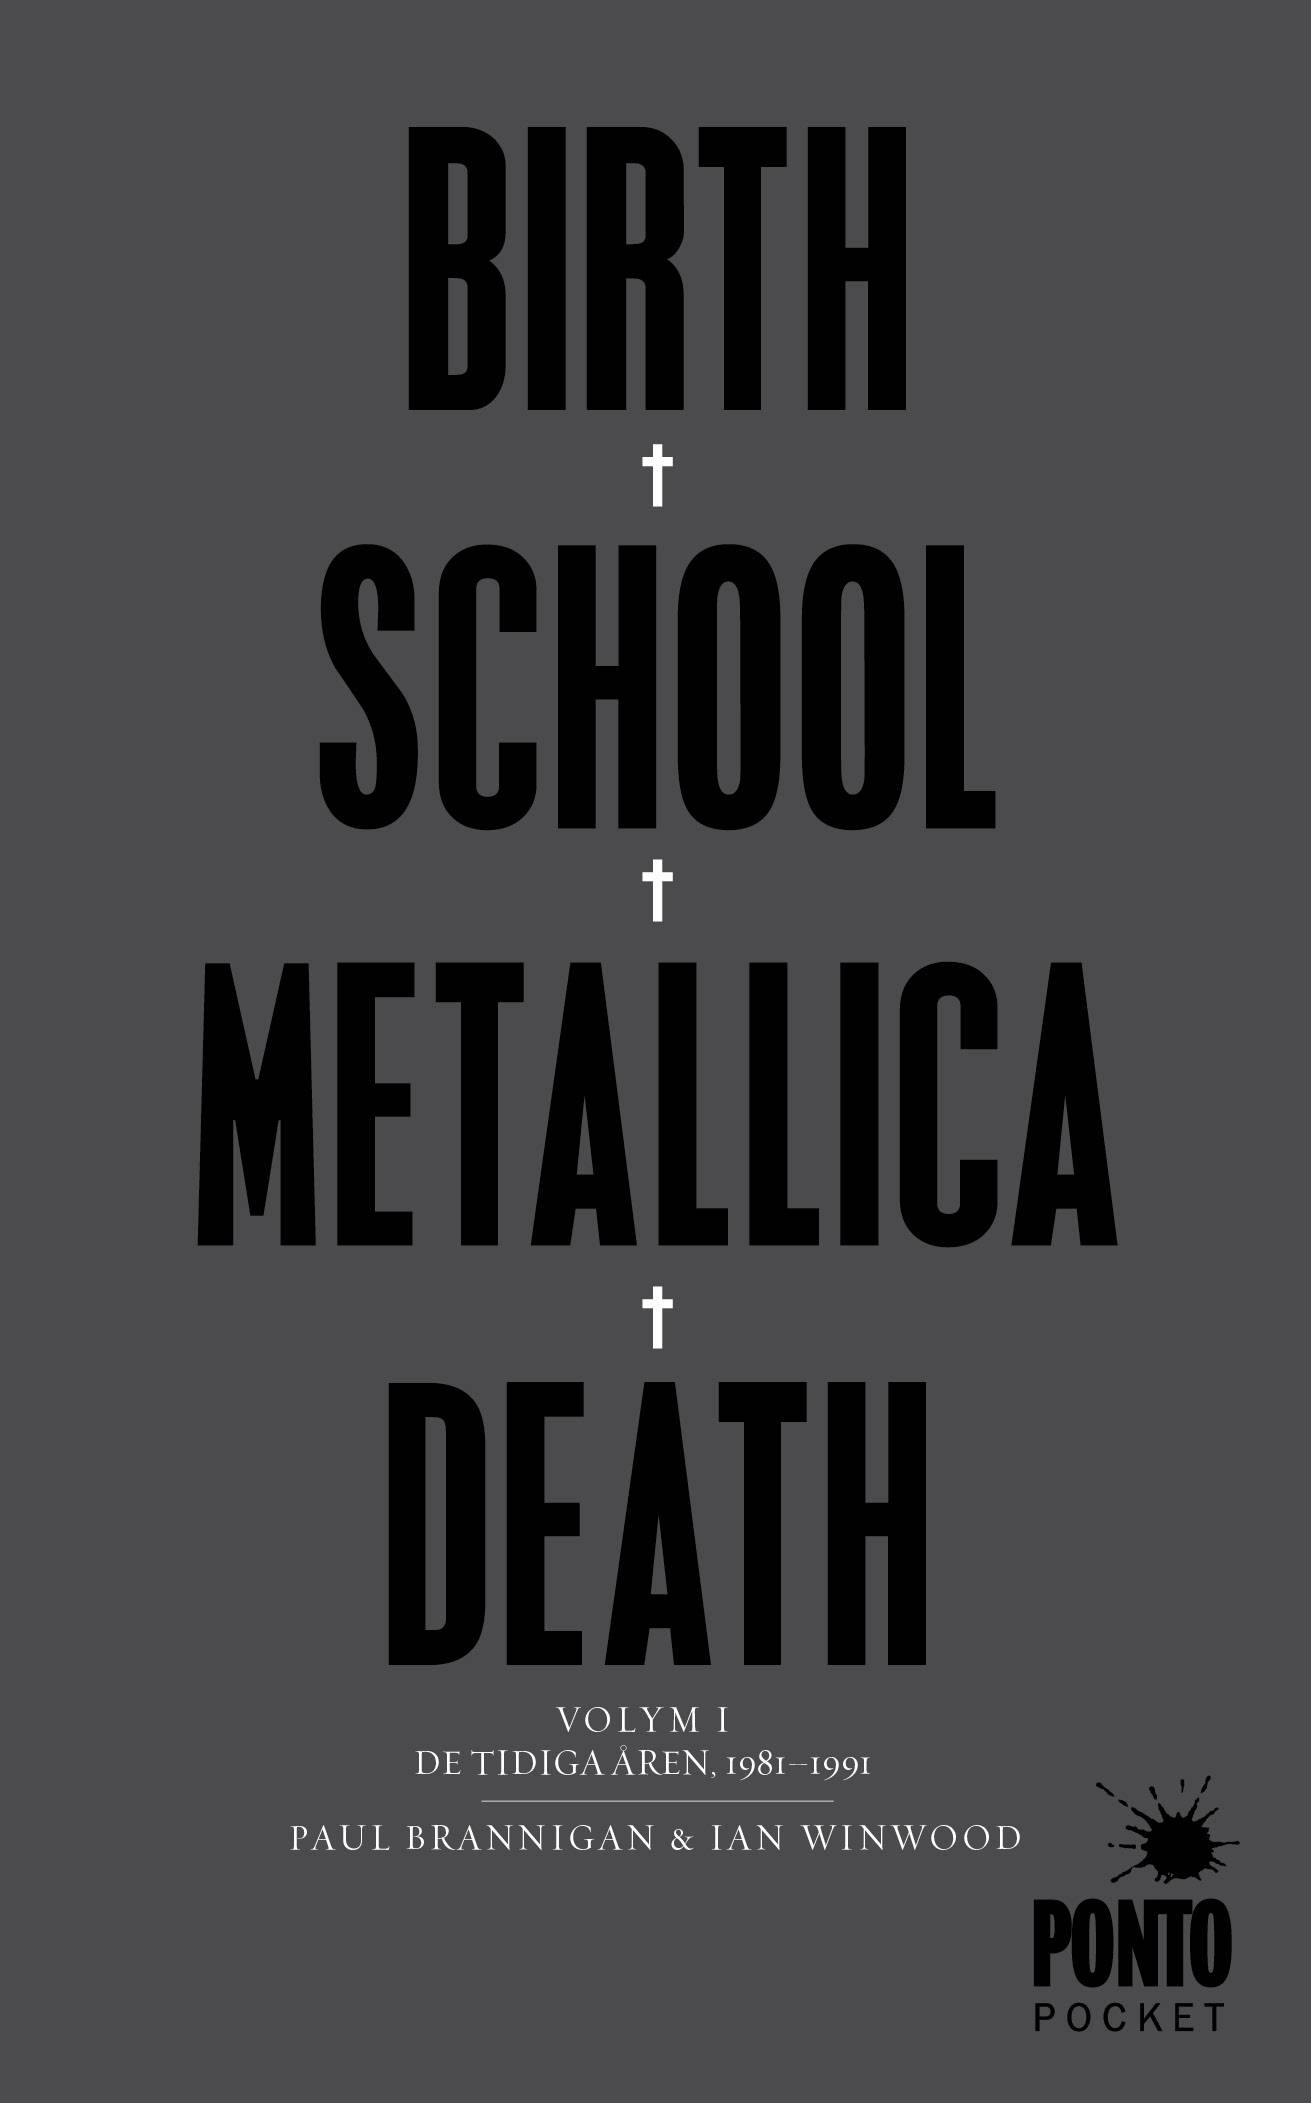 Birth, school, Metallica, death. Vol. 1, De tidiga åren, 1981-1991